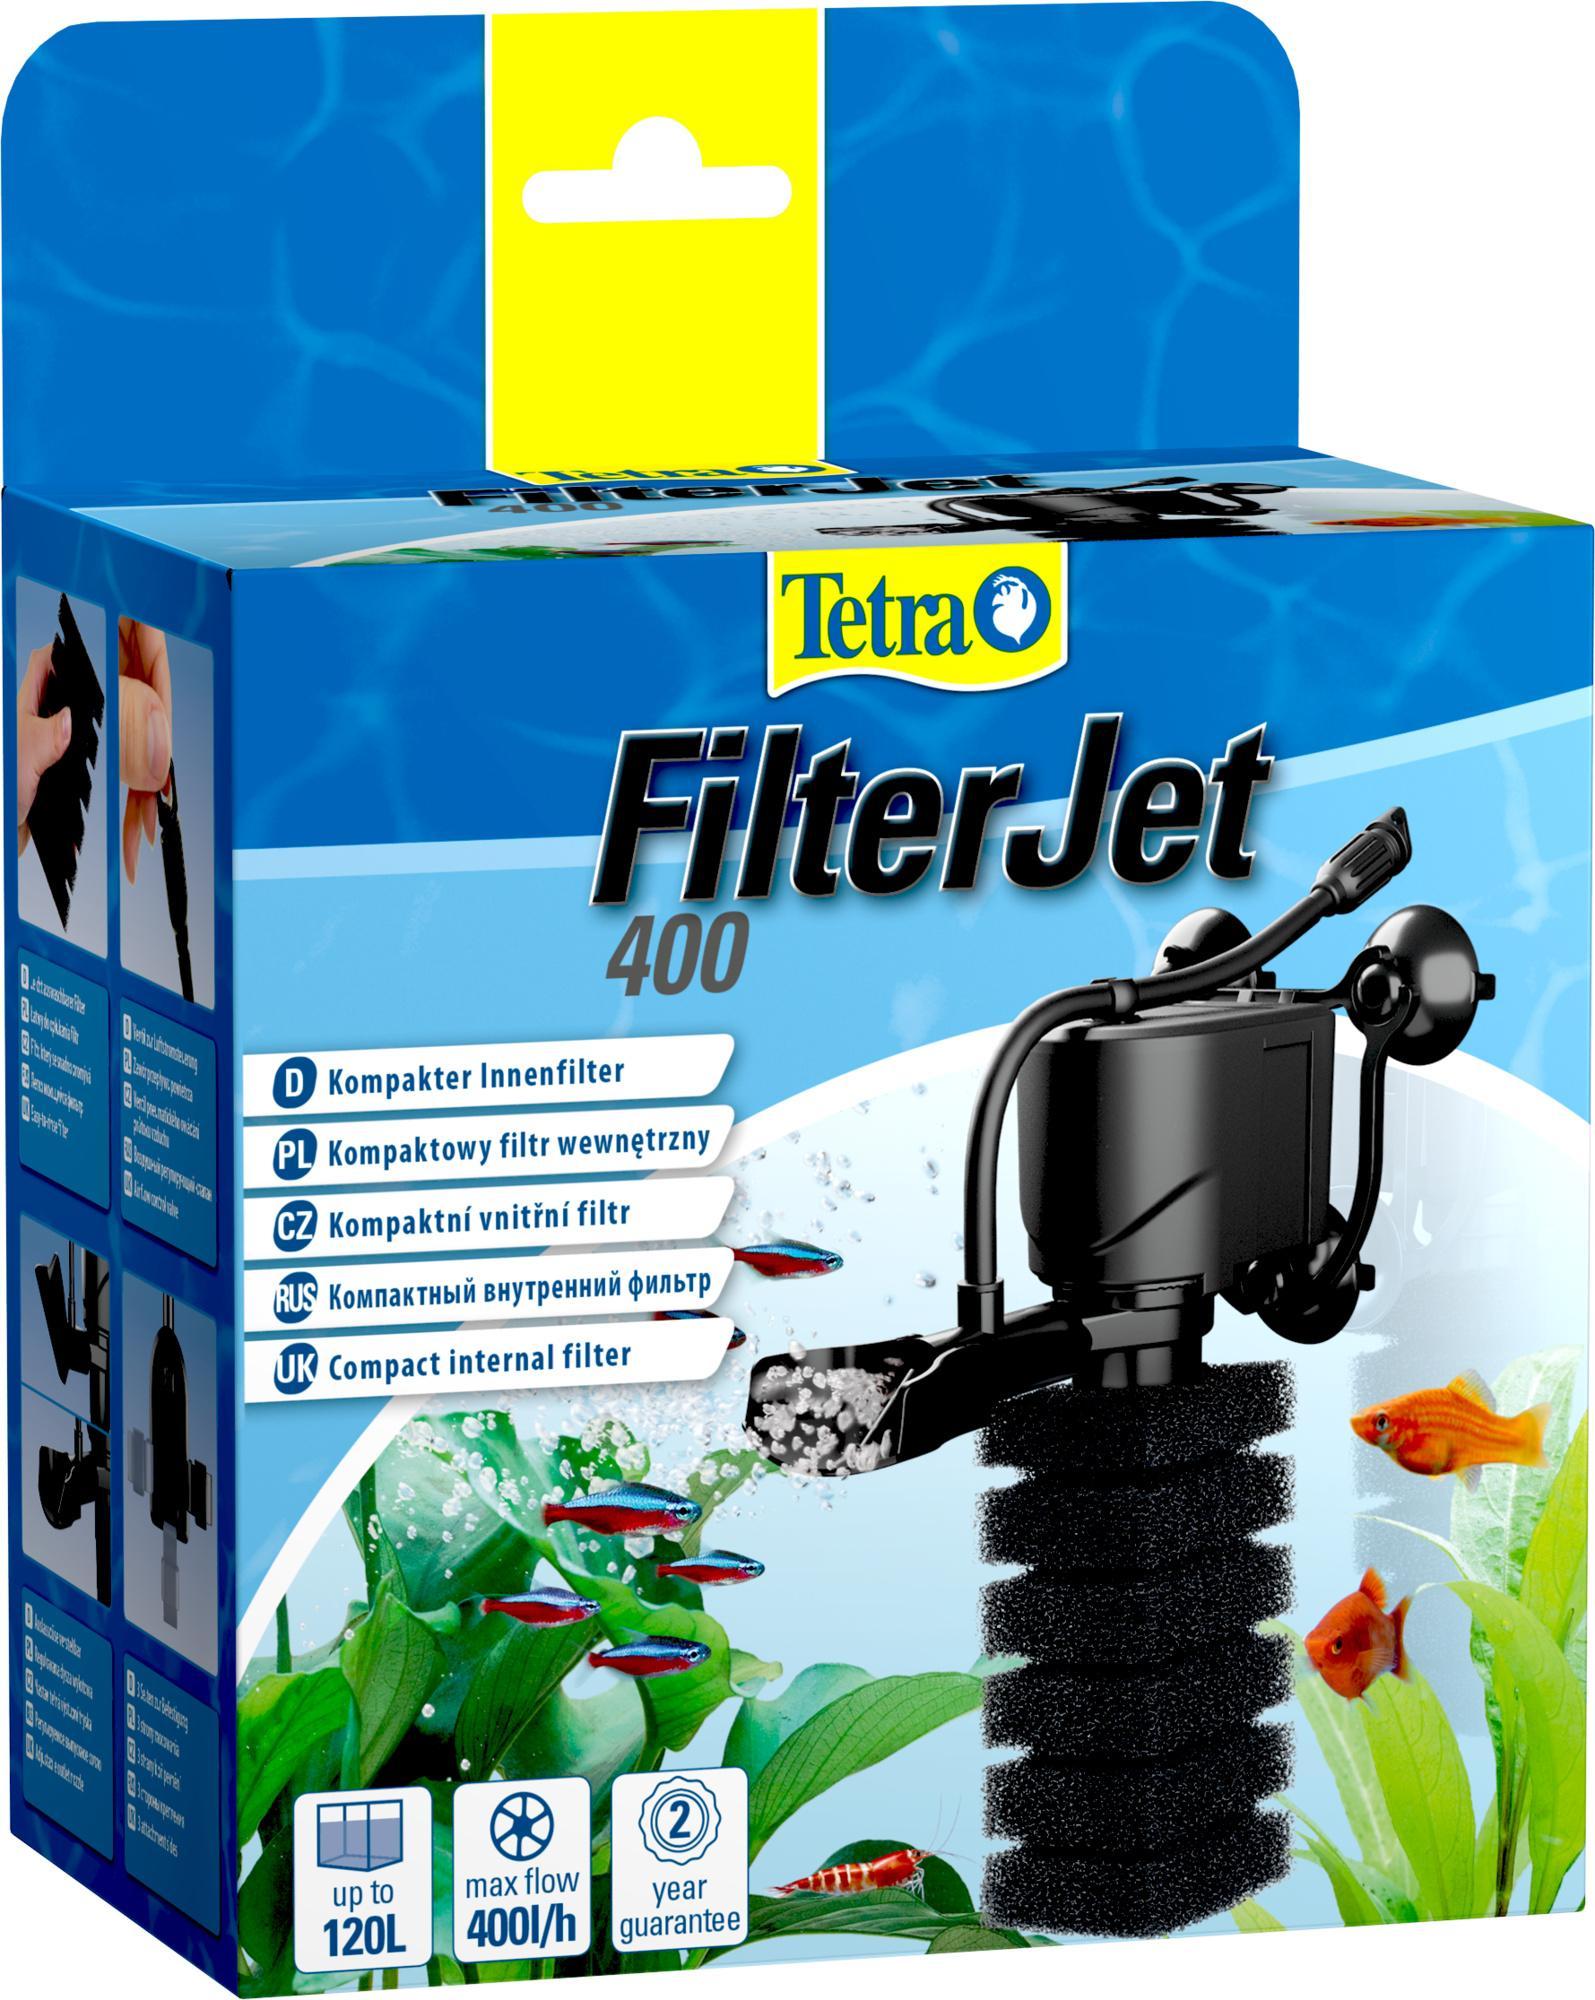 Tetra FilterJet 400 - internal filter akvārija filtrs